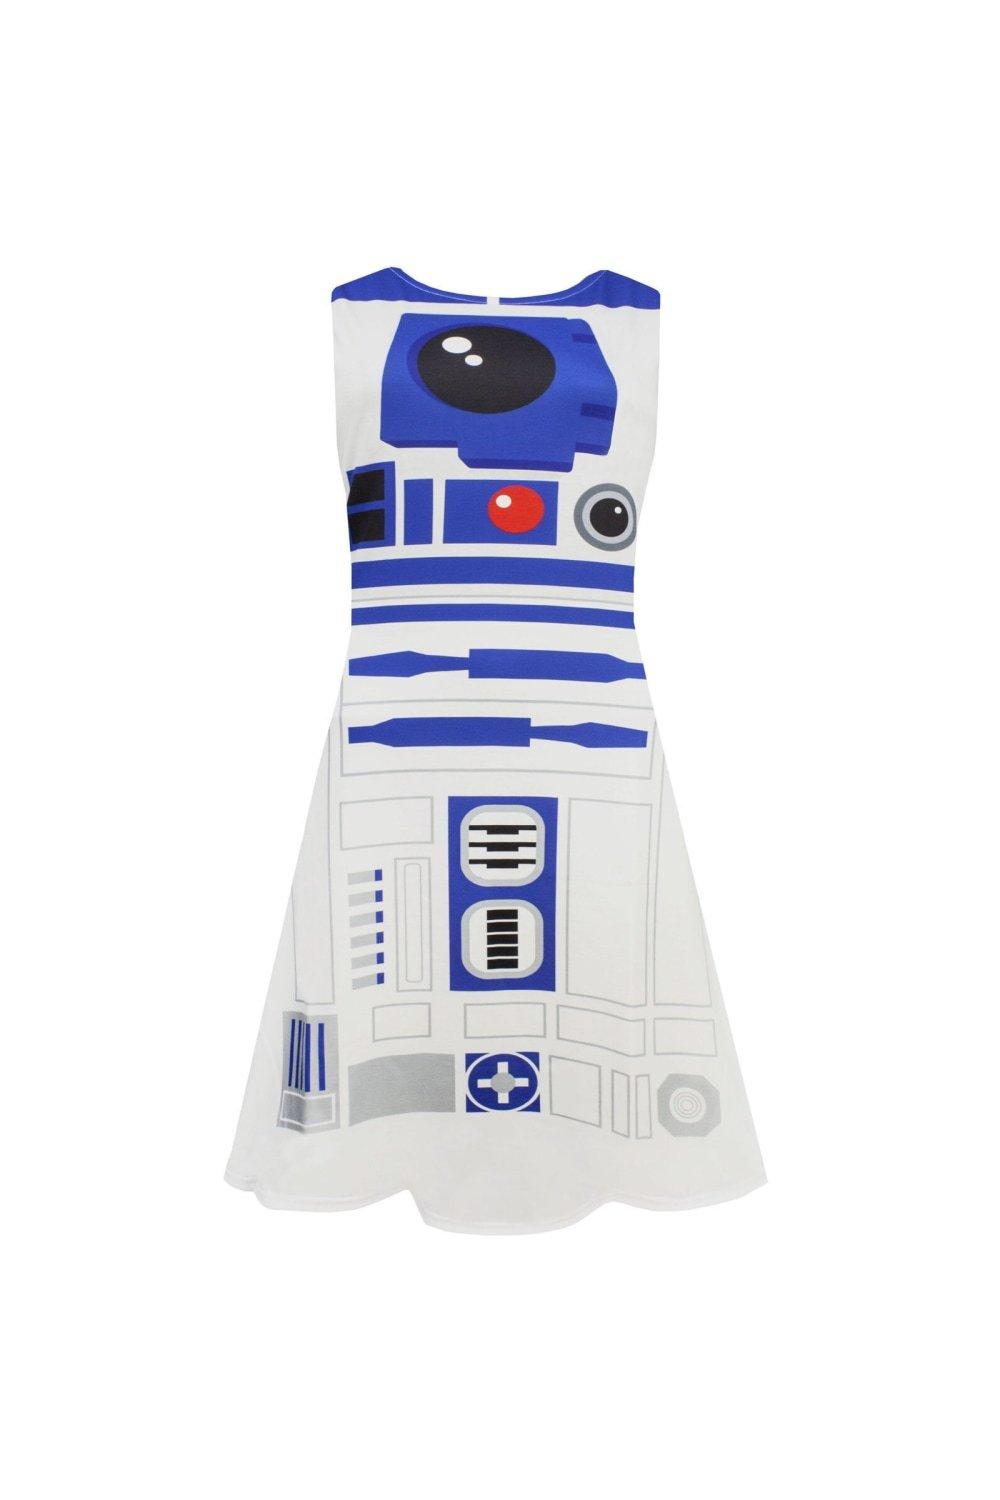 R2-D2 Cosplay Skater Dress